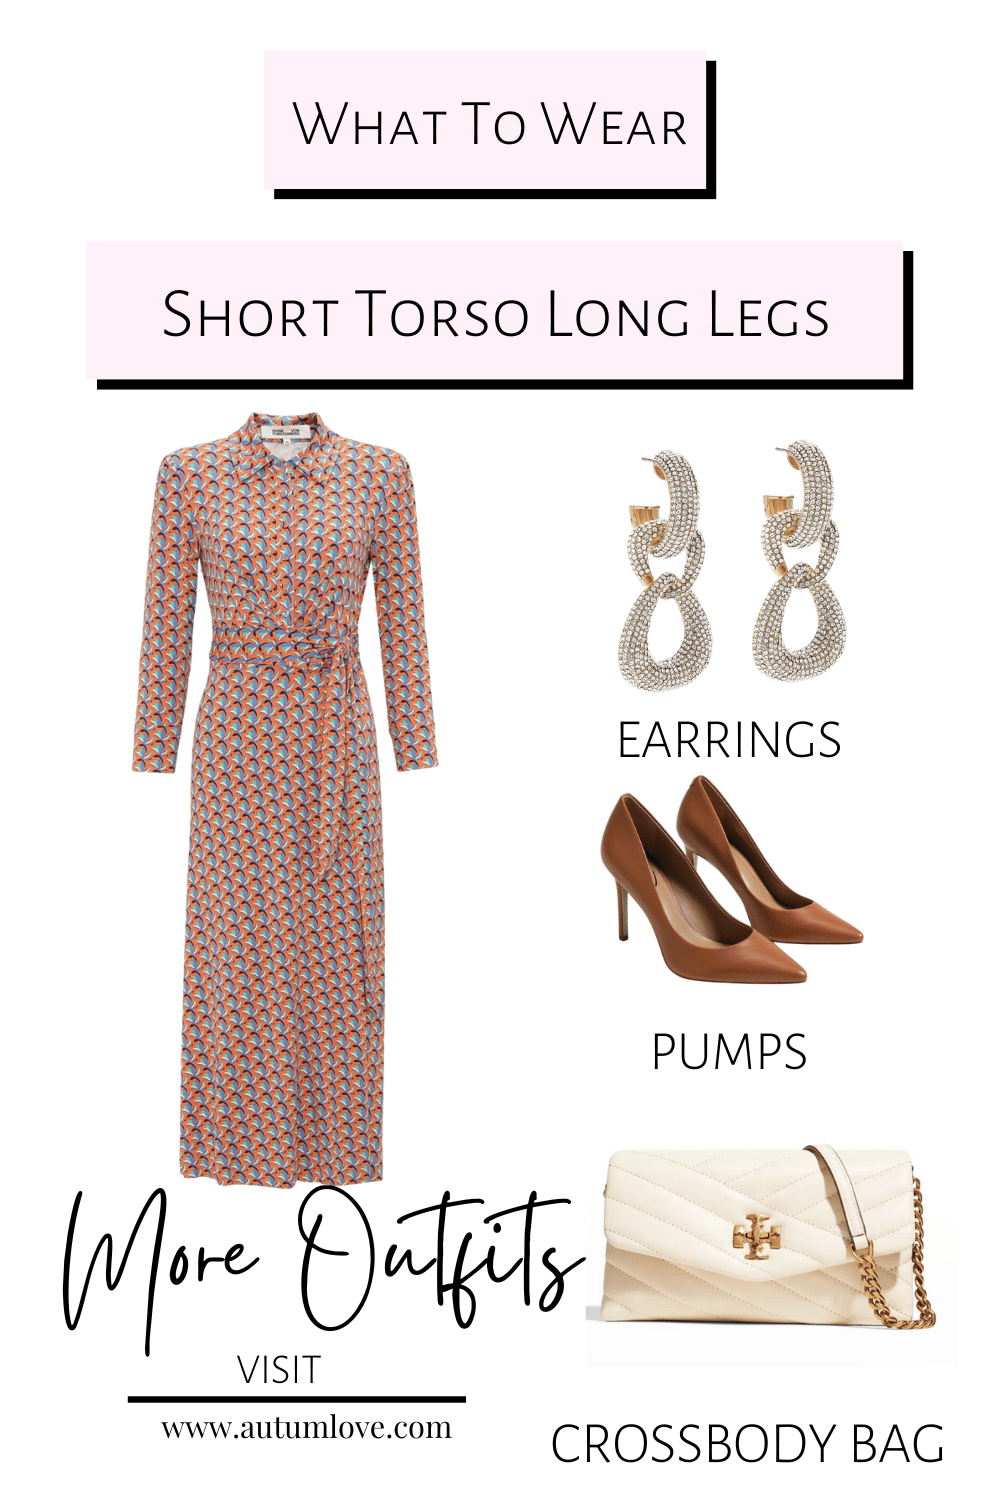 Long Torso Short Legs Ultimate Styling Guide - FashionActivation, long legs short  torso 